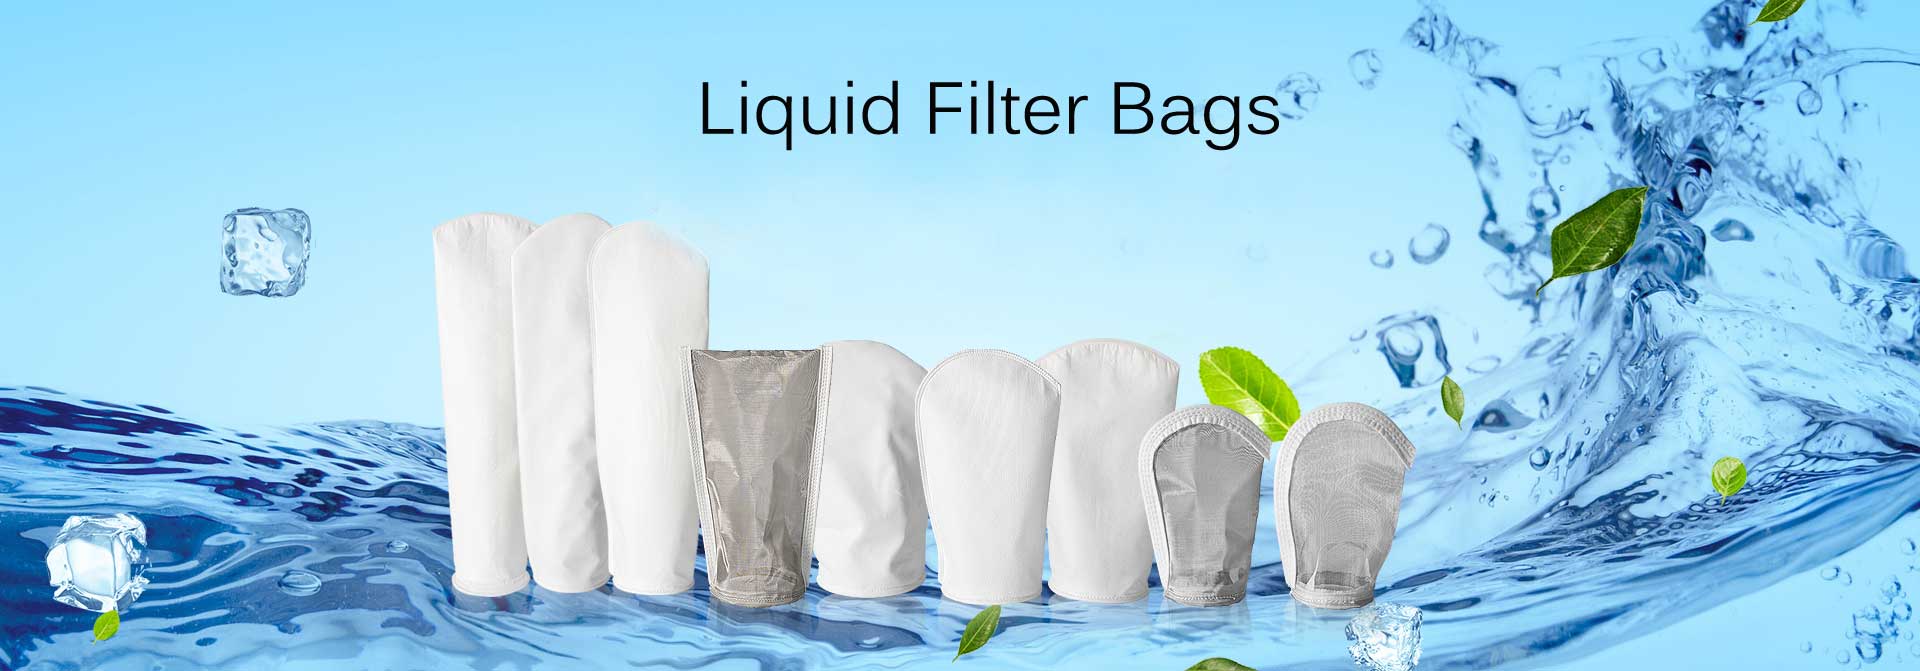 Liquid Filter Bags